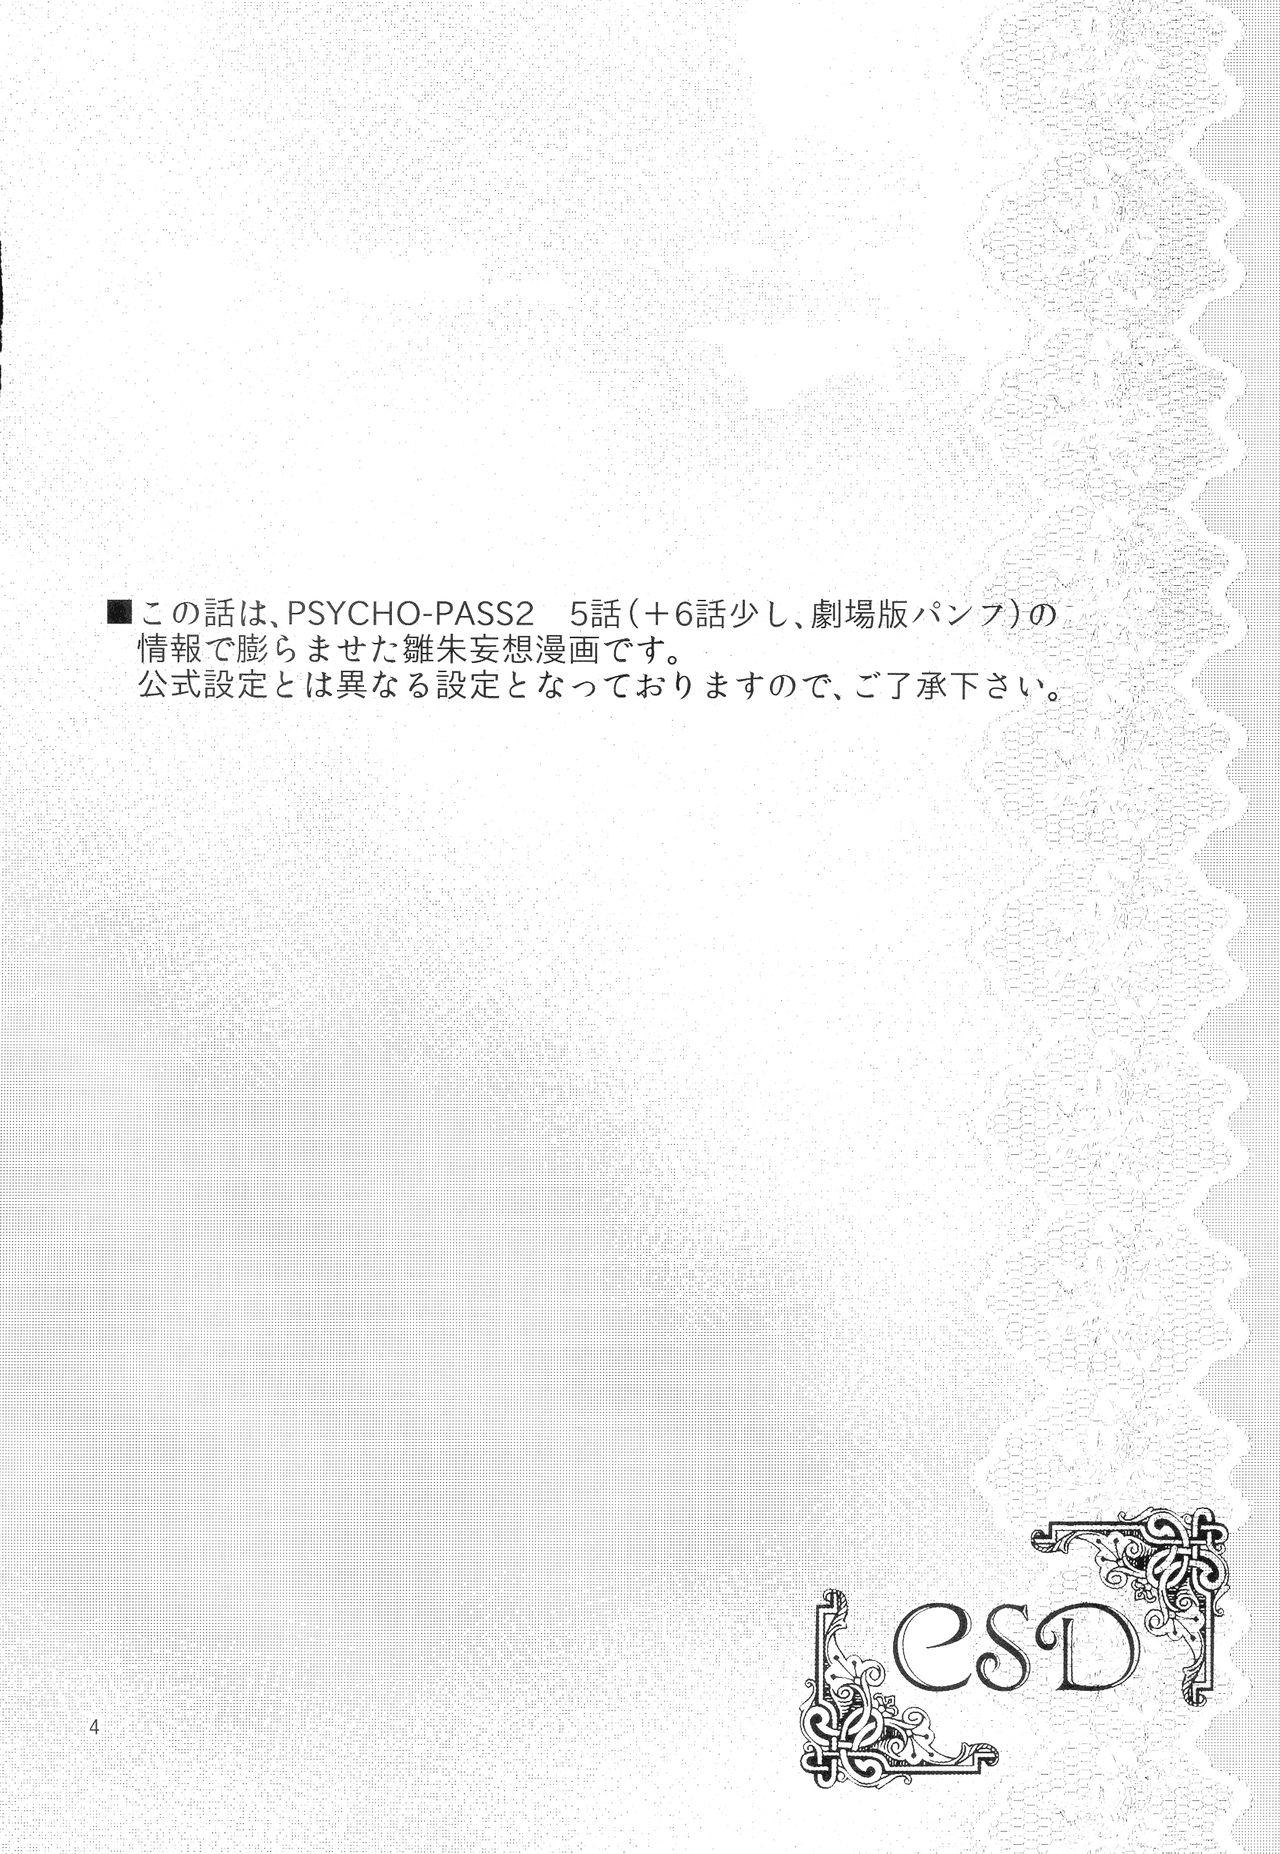 Hotwife CSD - Psycho-pass Nuru Massage - Page 4